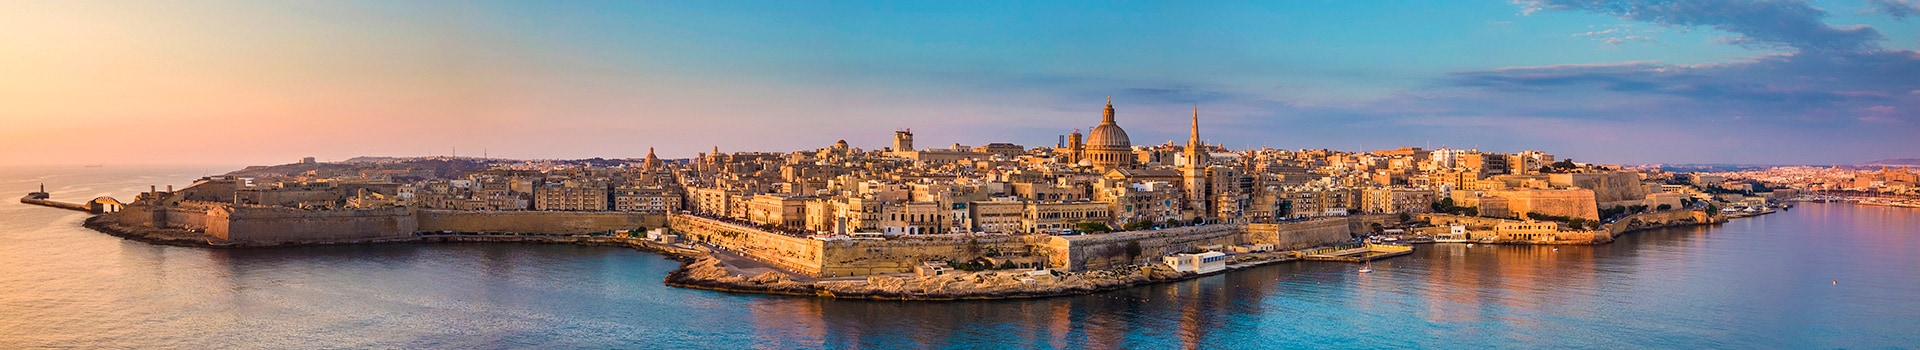 Billetes de Barco de Livorno a Malta